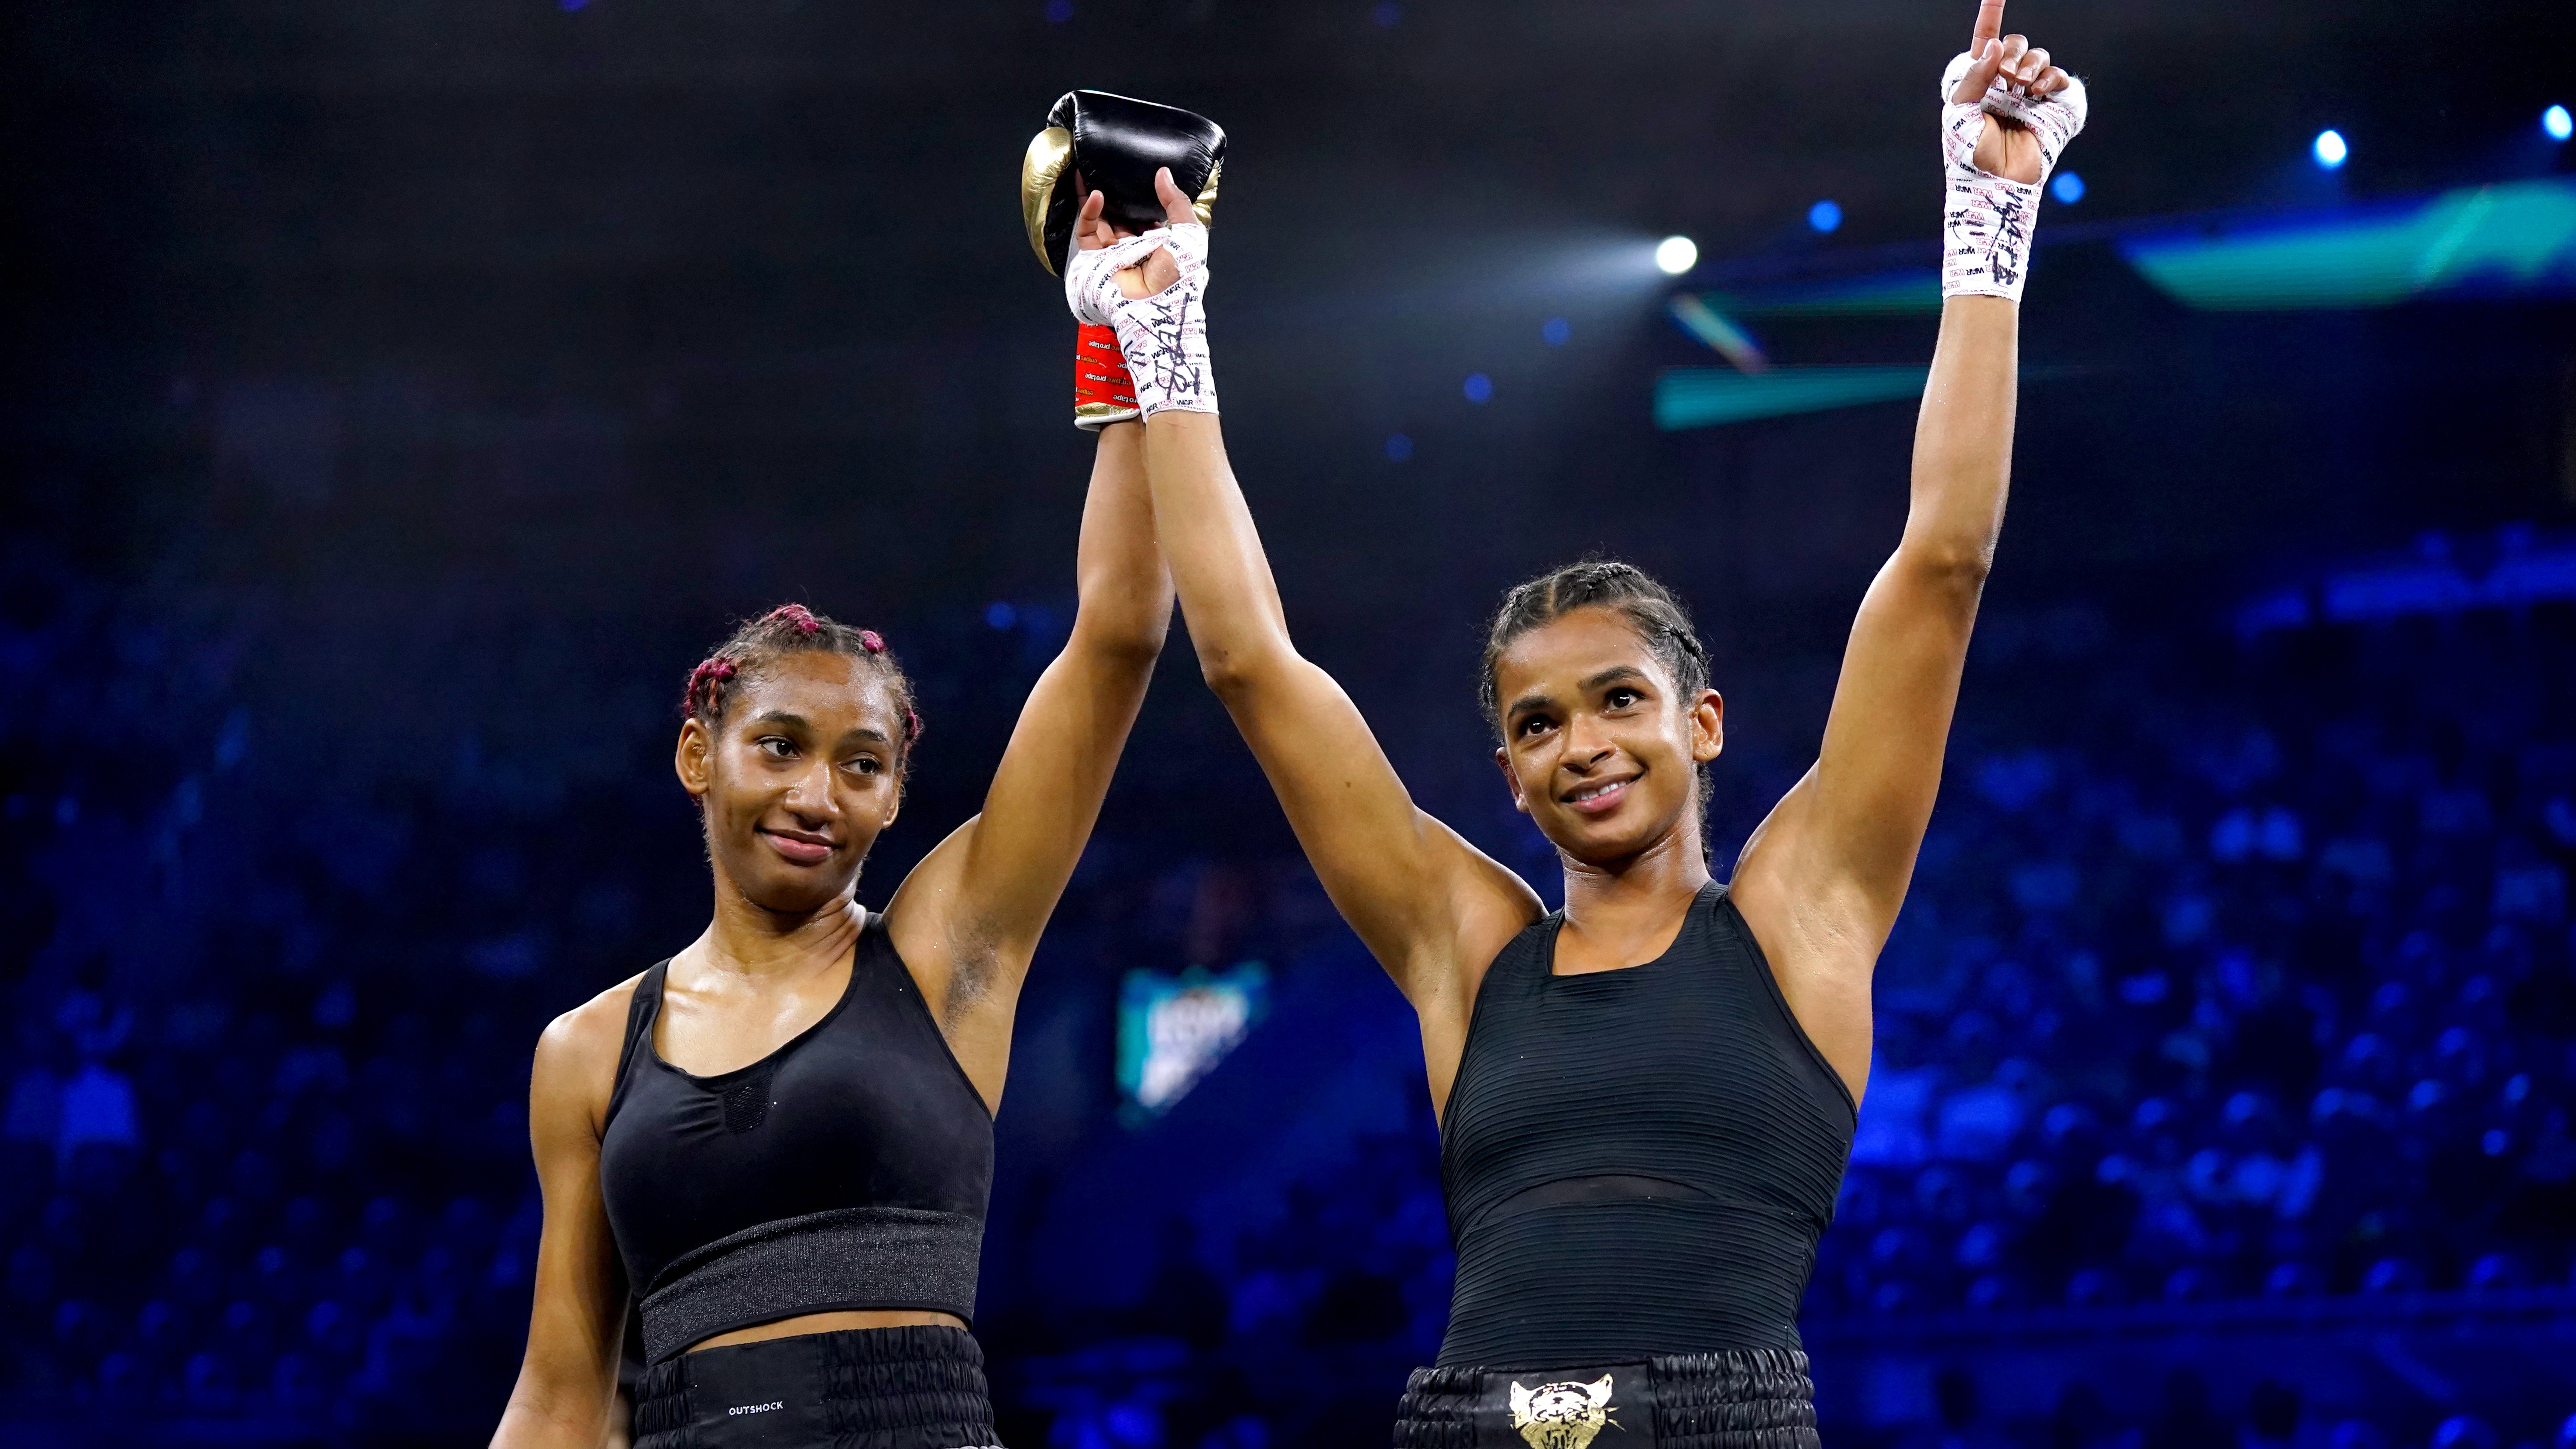 Anissa Kate Schoolgirl Porn - British-Somali boxer Ramla Ali wins Saudi Arabia's first female boxing  match | ITV News